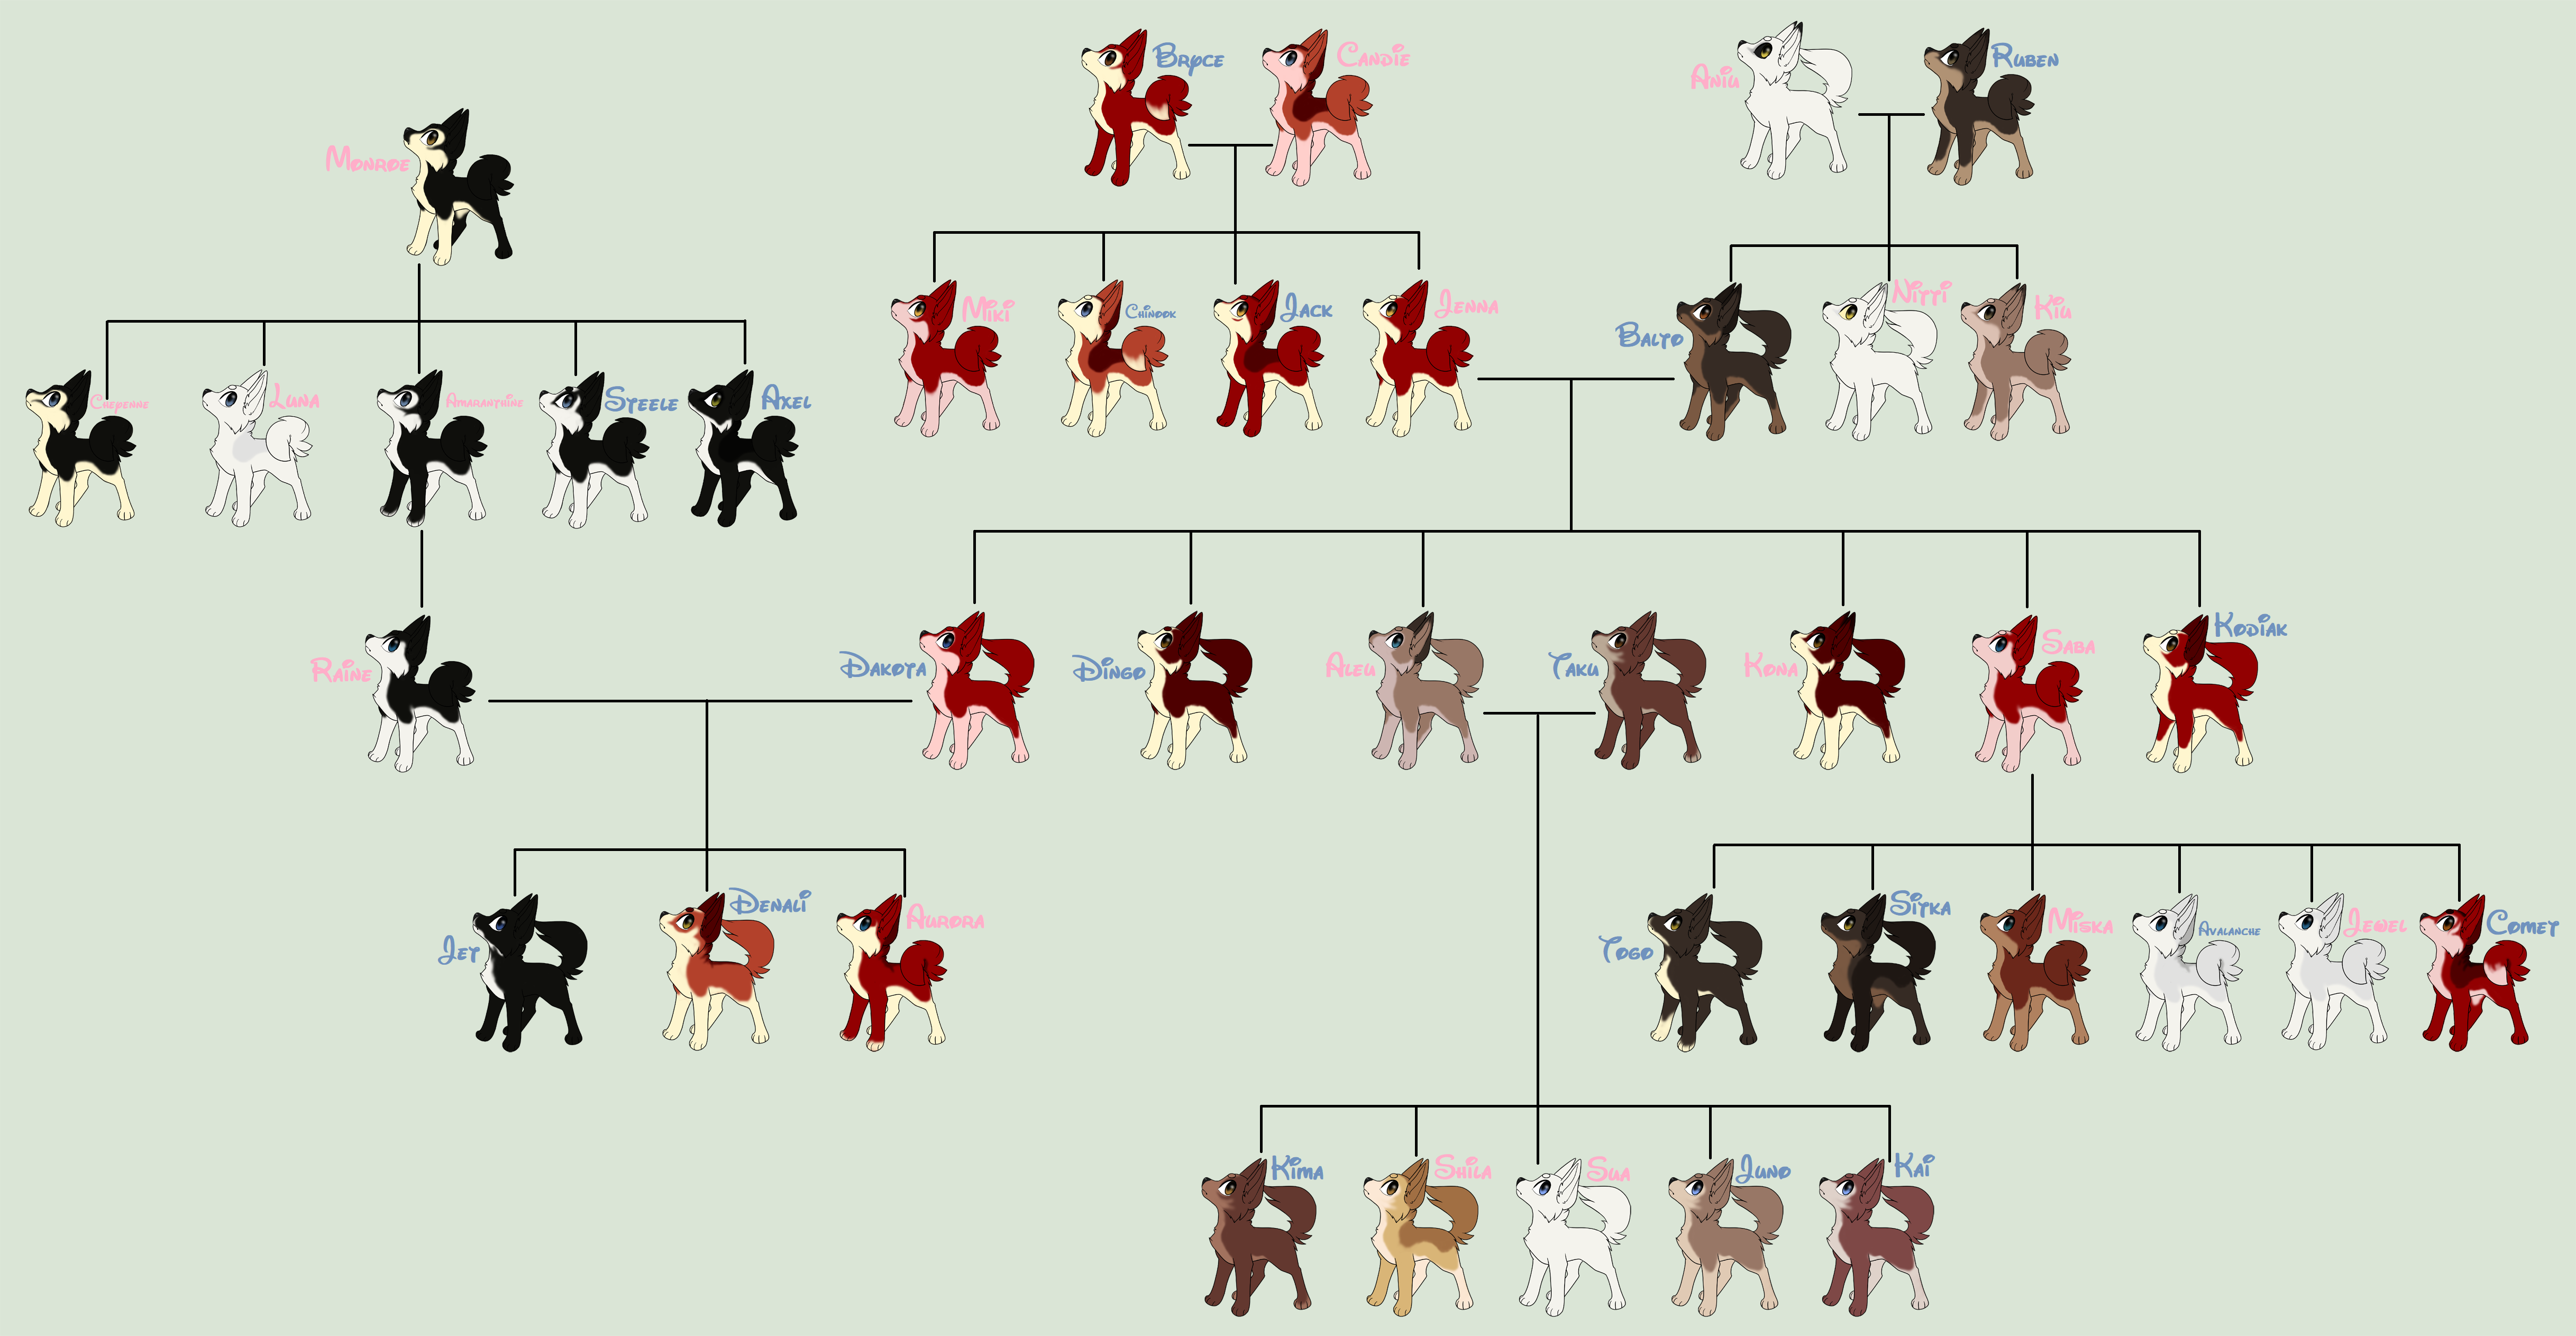 Family tree of Ales by Smitho92 on DeviantArt